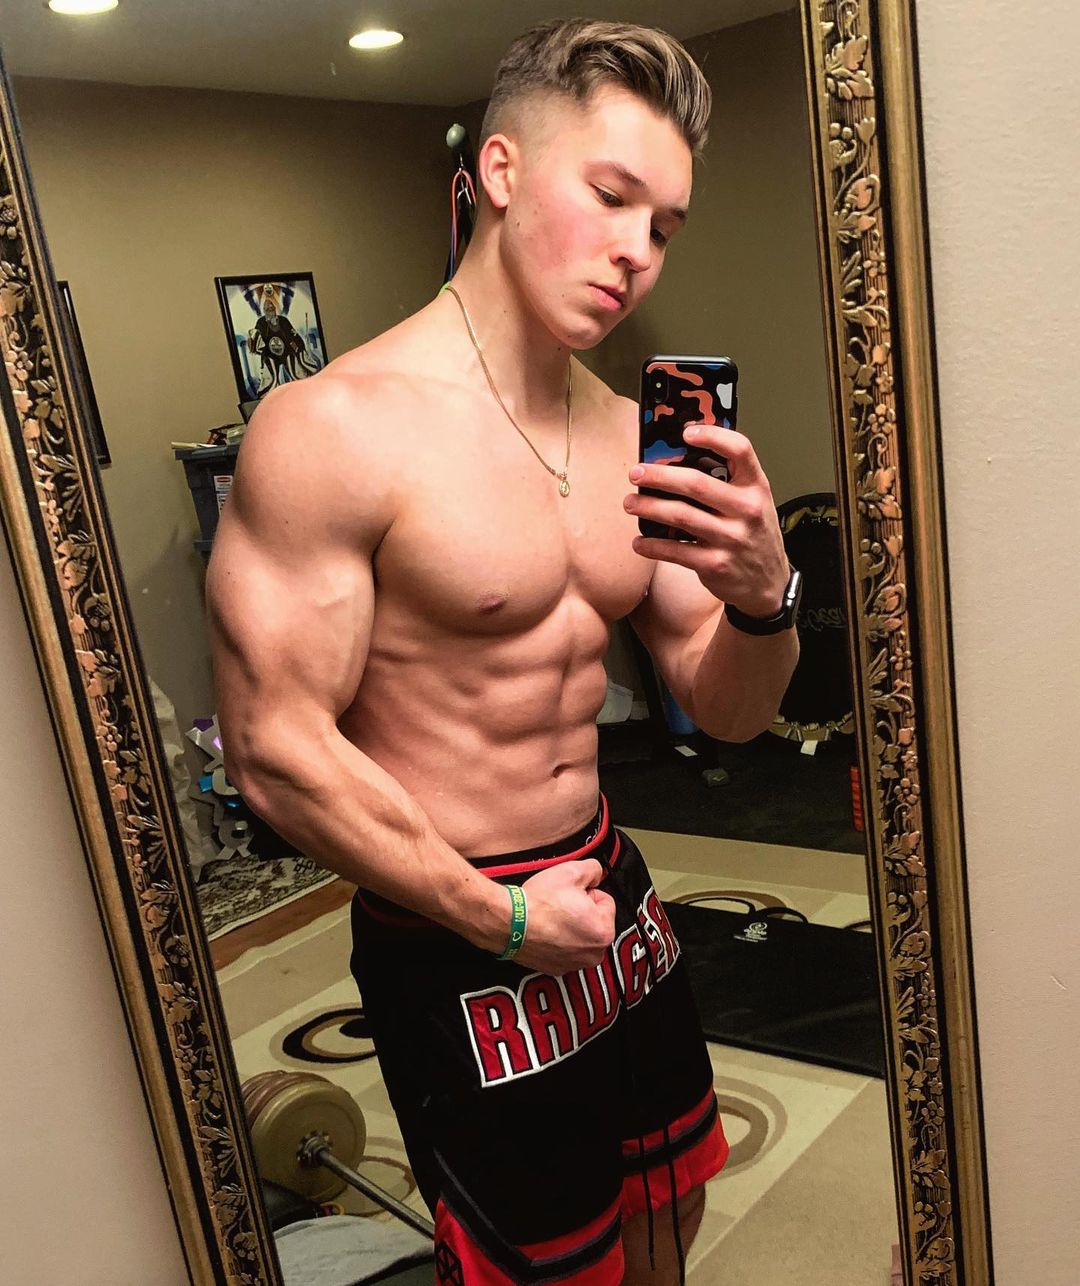 young-sexy-jock-shirtless-teen-muscular-body-abs-selfie